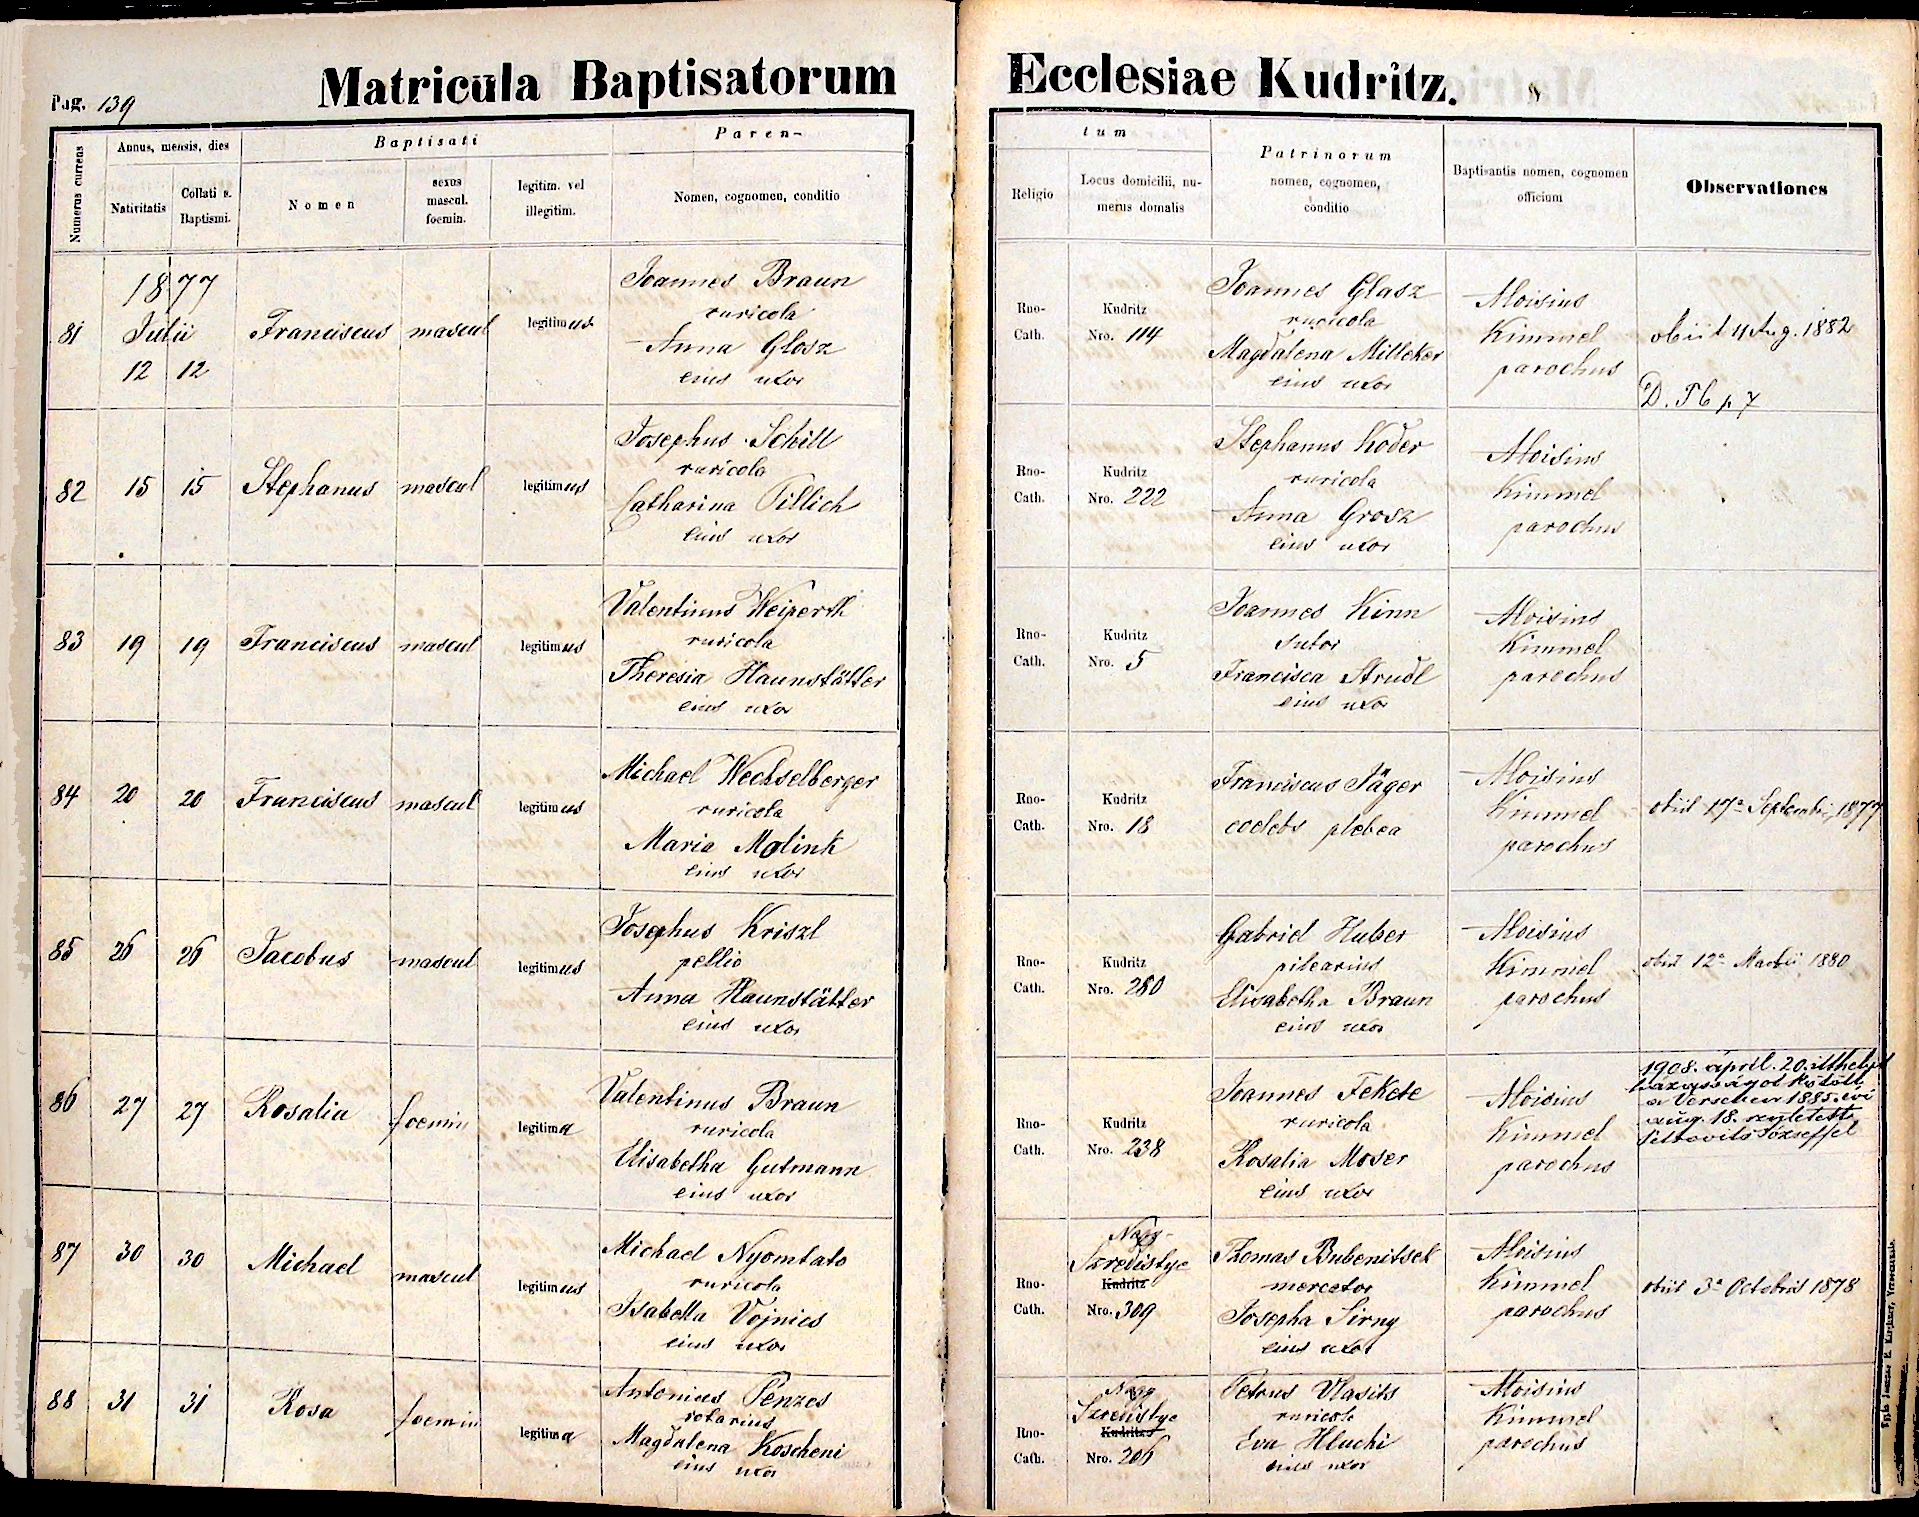 images/church_records/BIRTHS/1870-1879B/1876/139